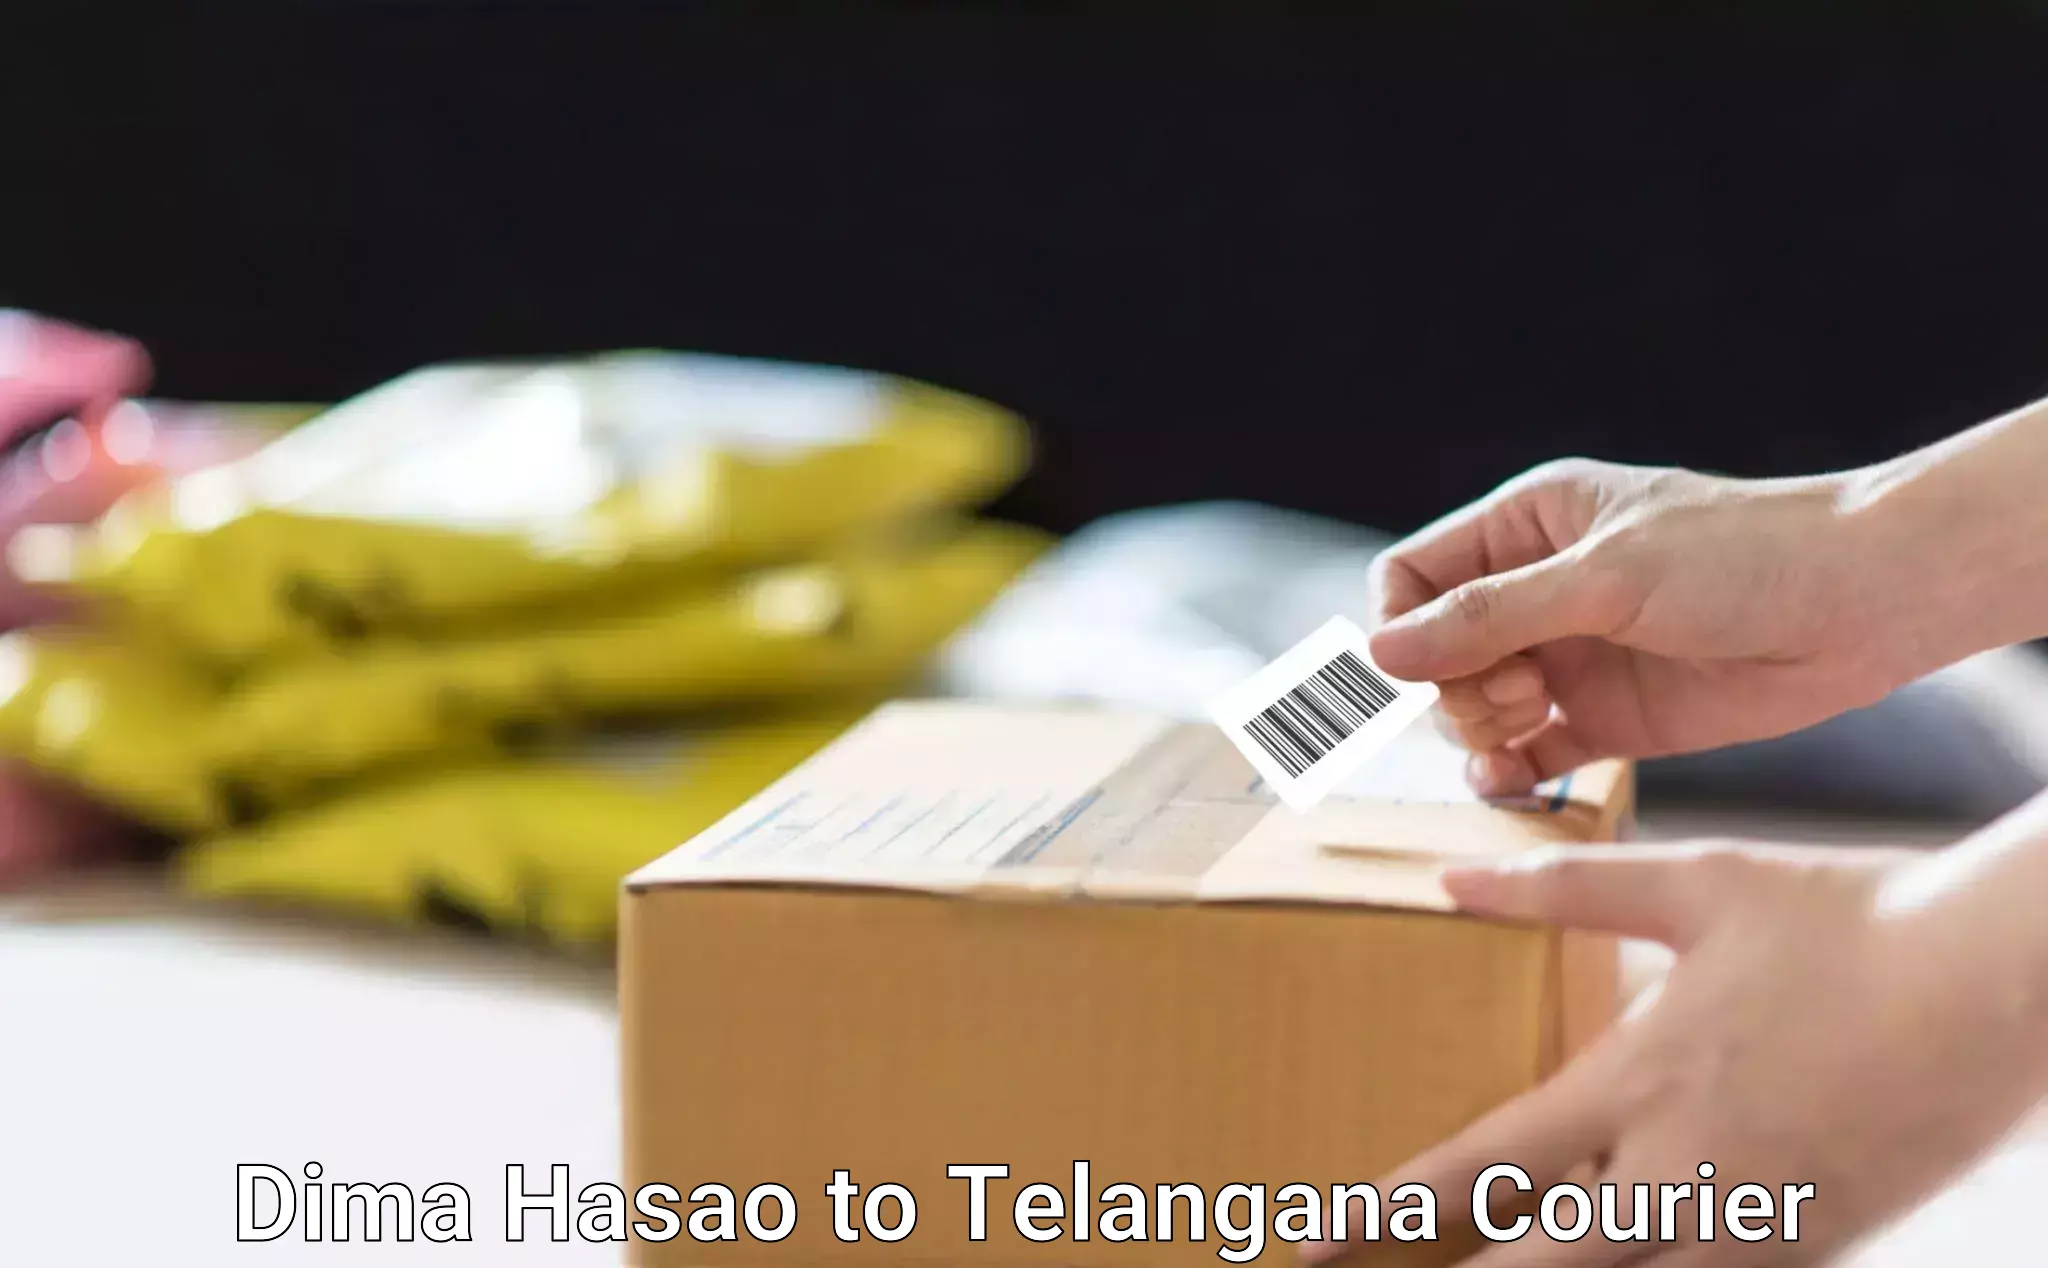 Bulk courier orders Dima Hasao to Telangana